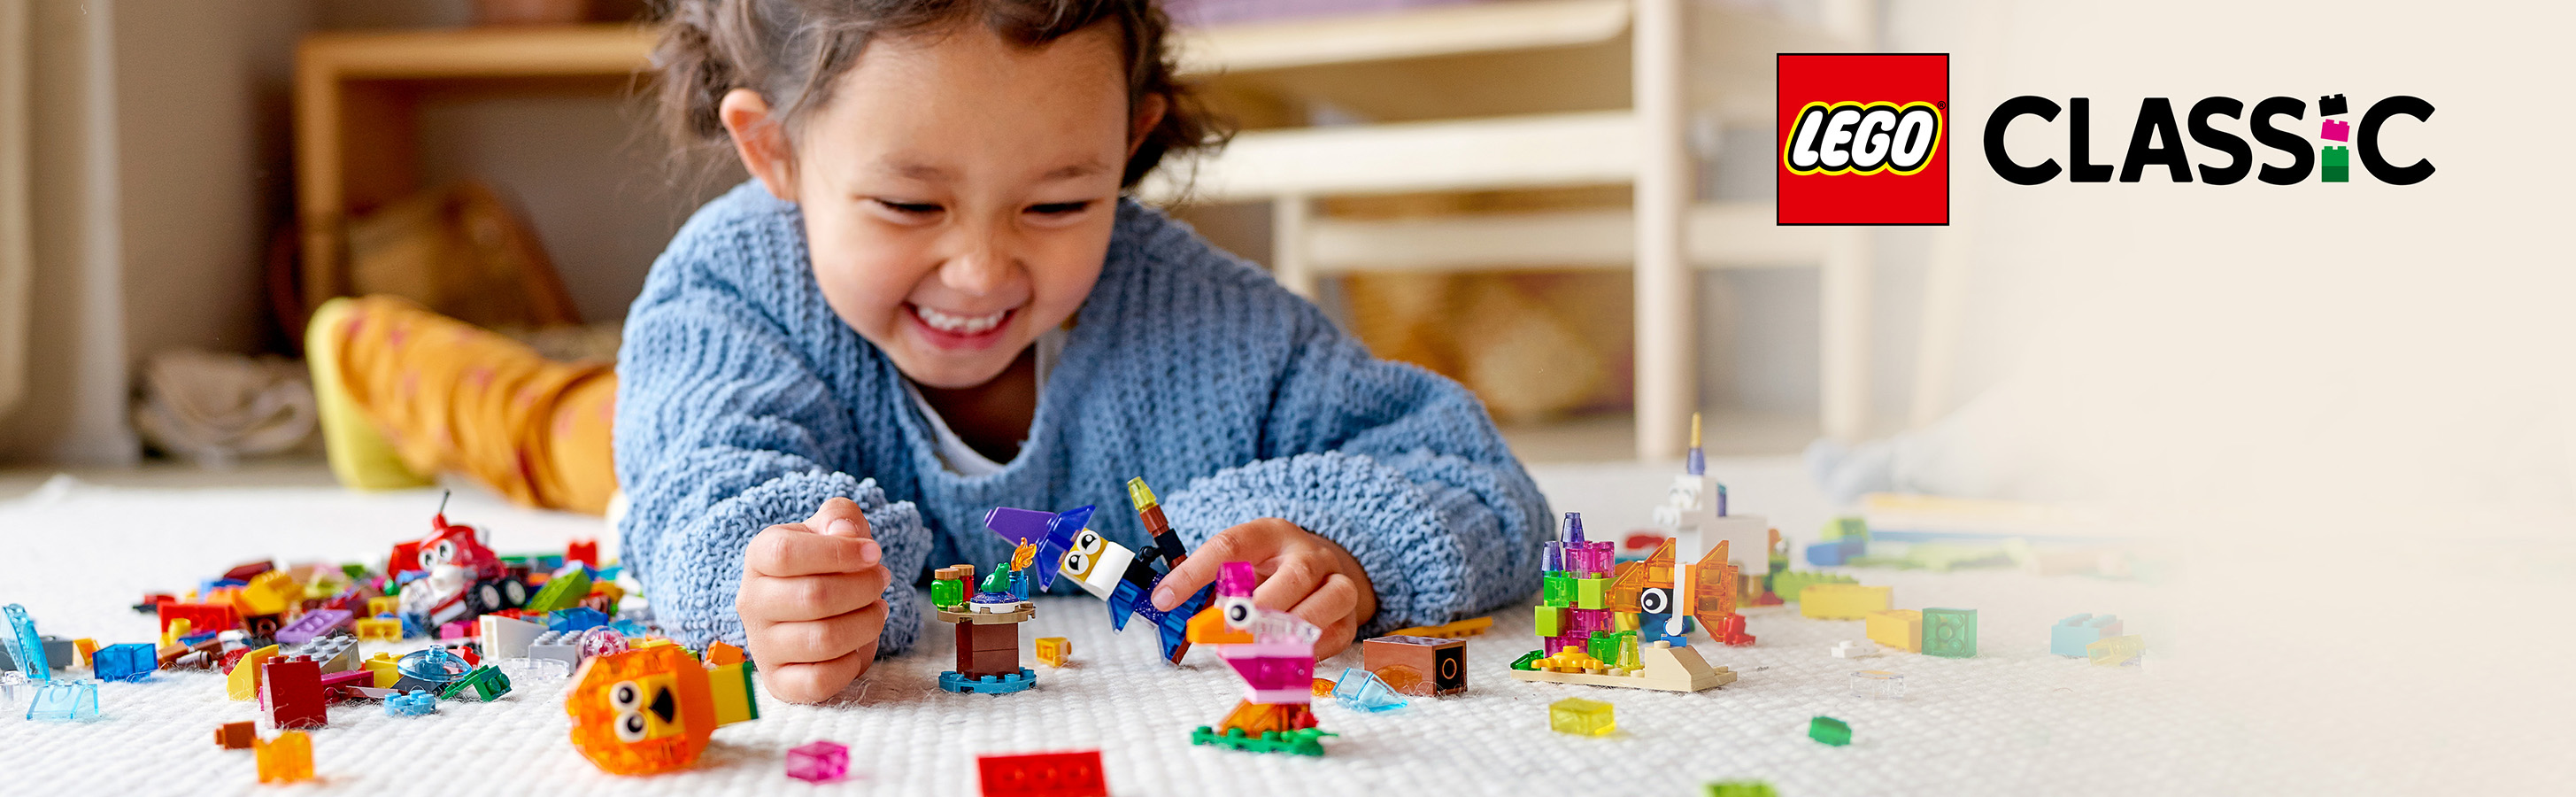 Add a sparkle to kids’ LEGO® play